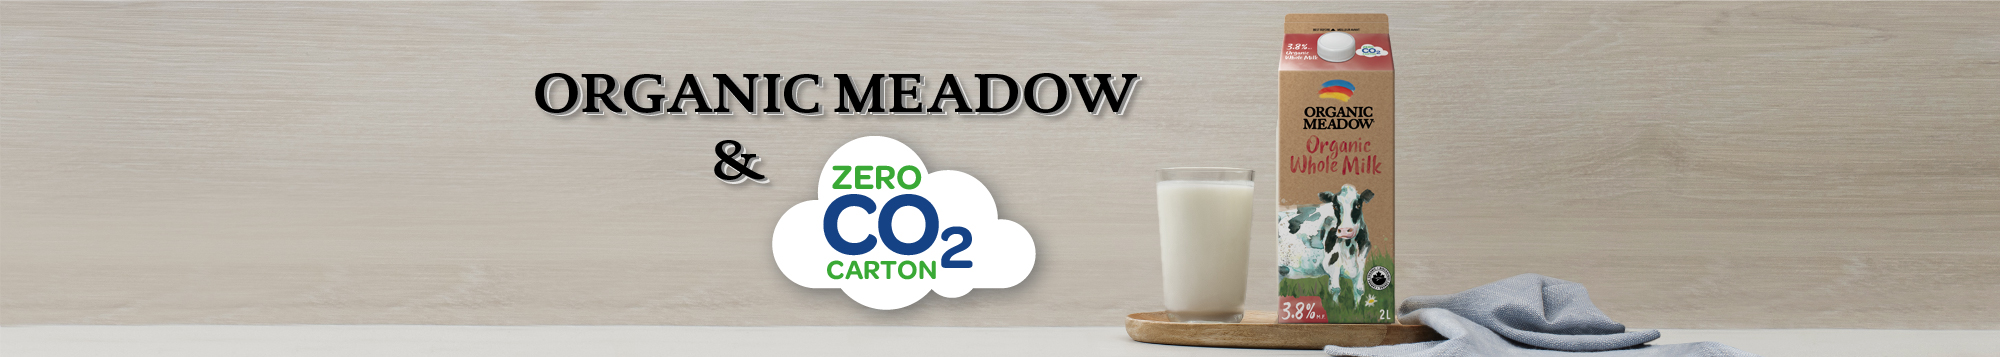 Zero Carbon banner image